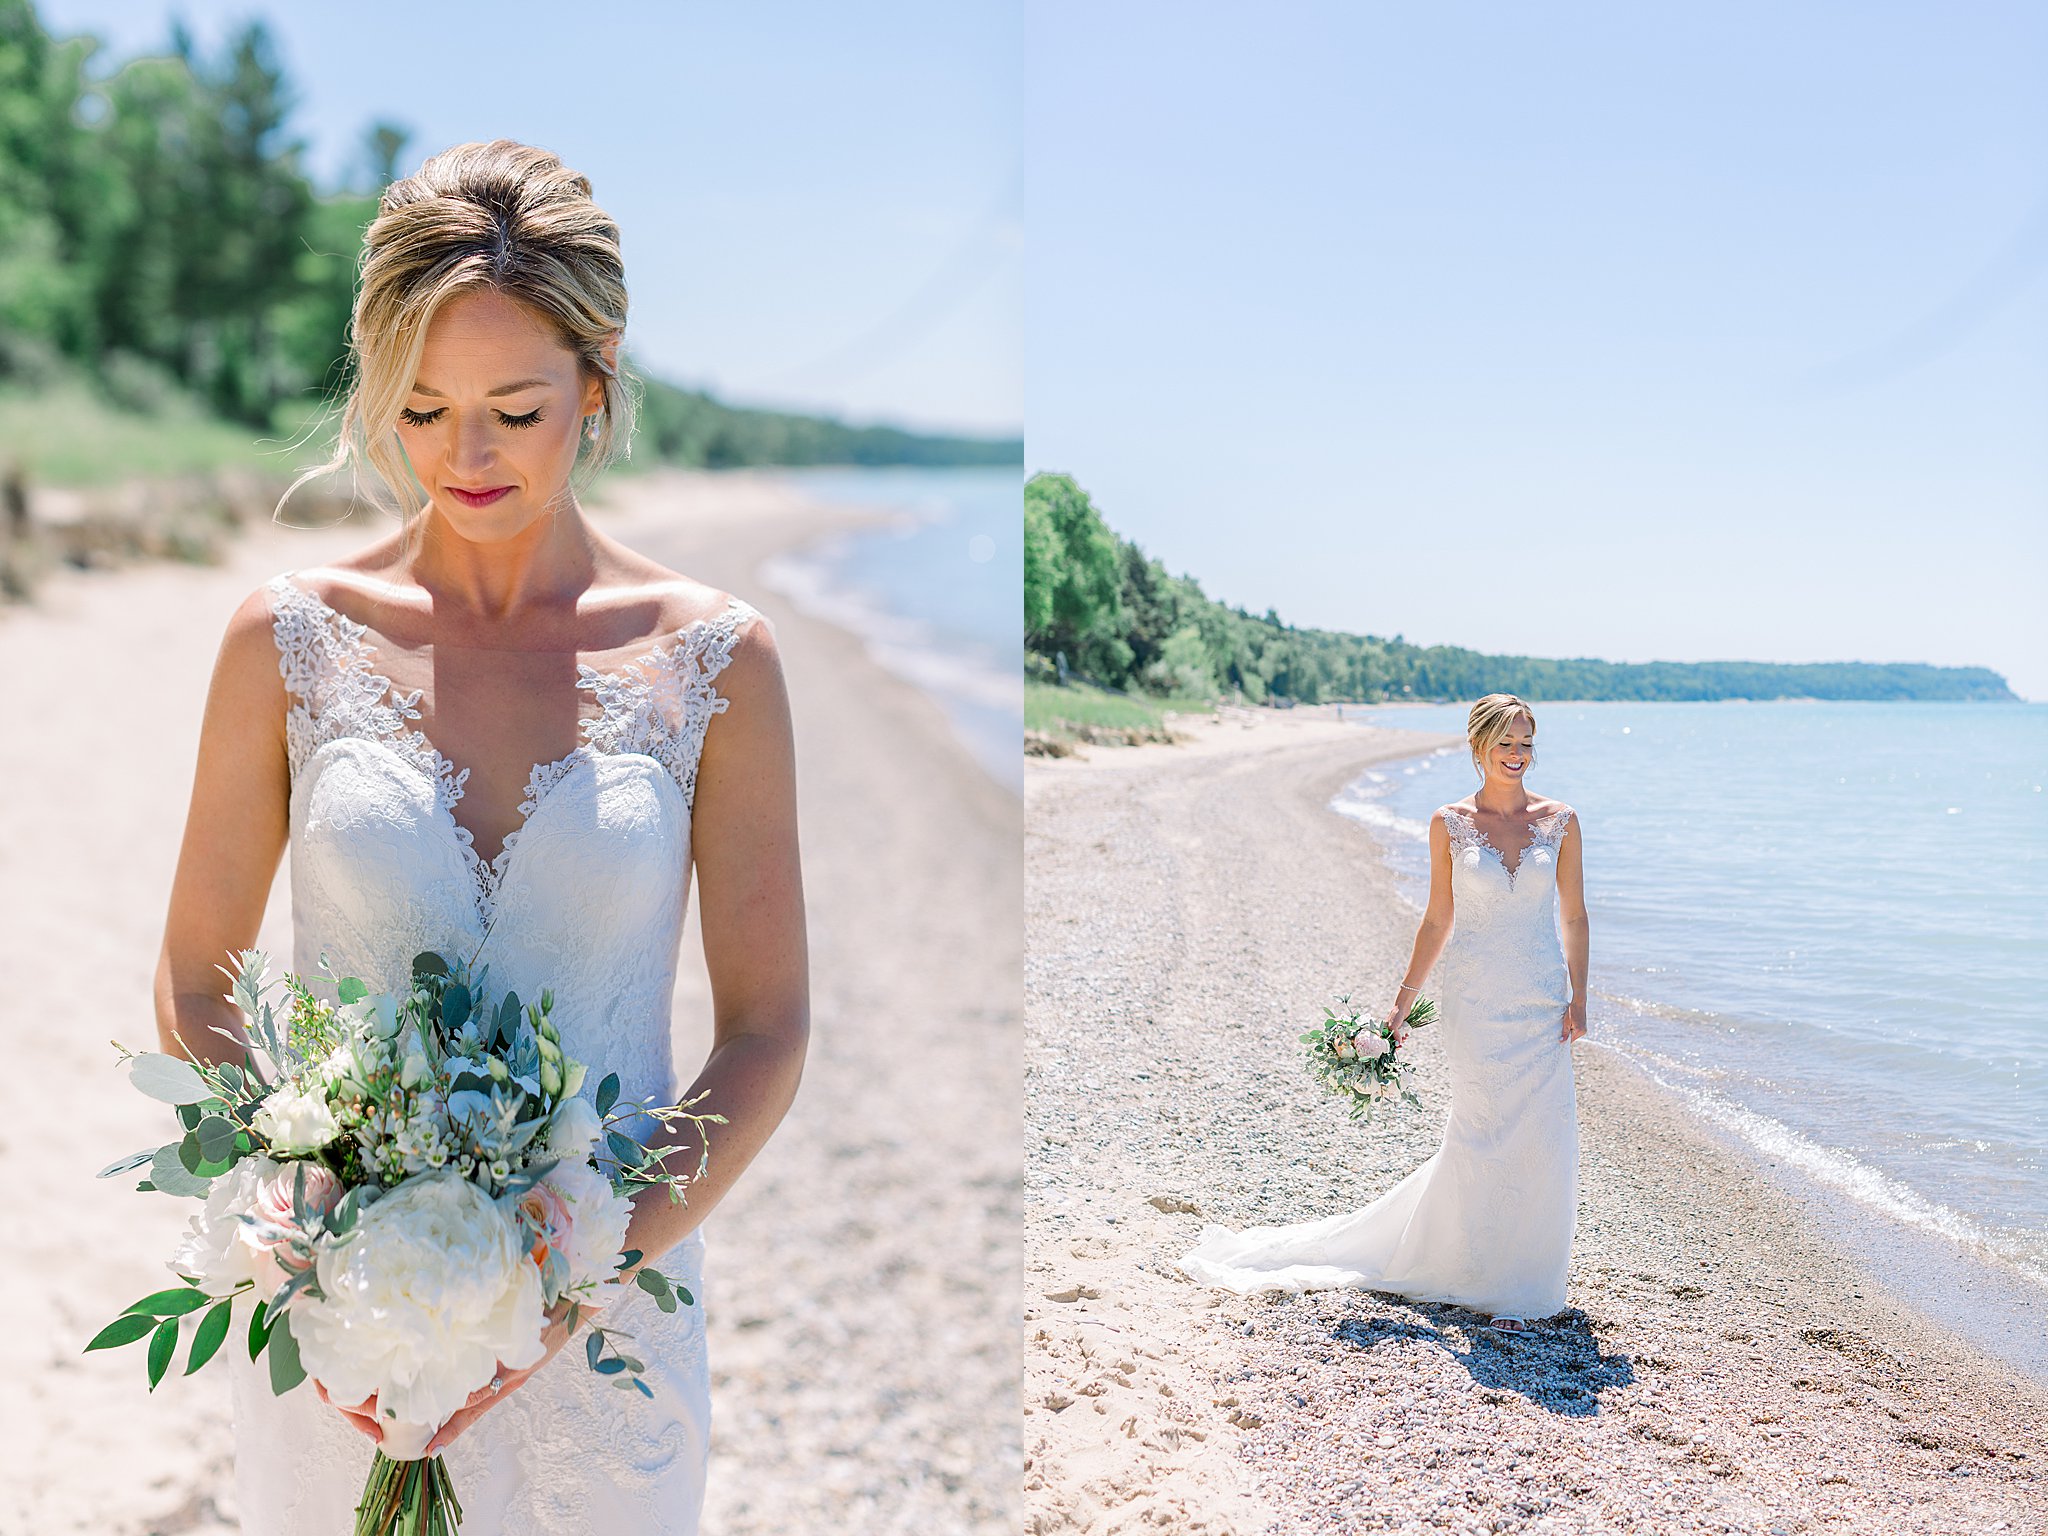 Bridal portraits at private beach on Lake Michigan for intimate Lake Michigan wedding.